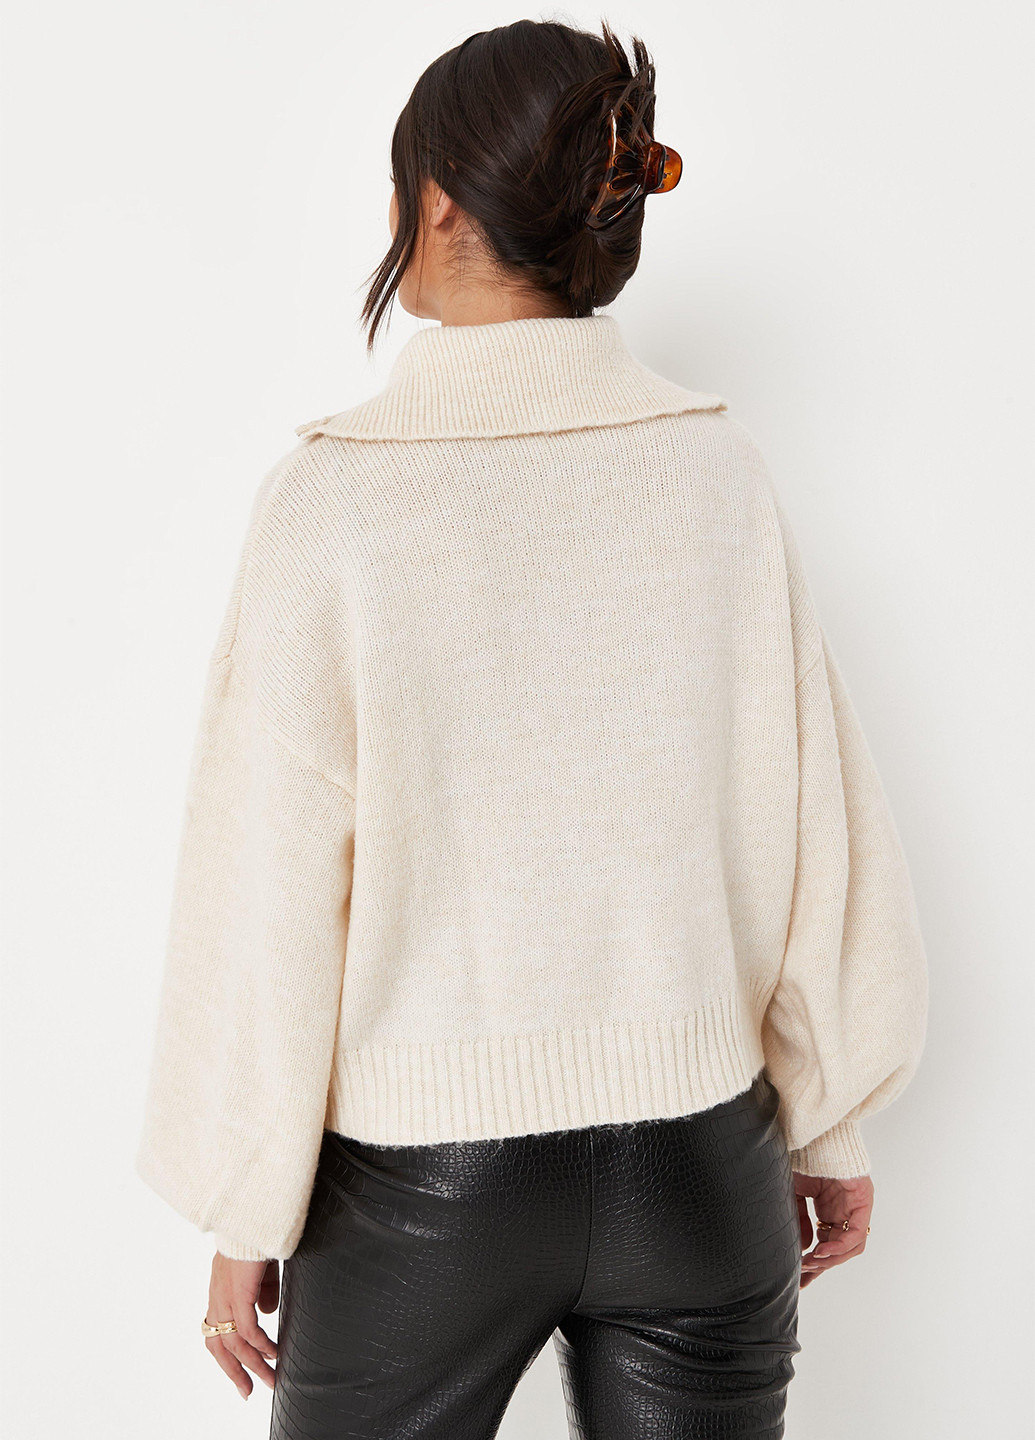 Молочный демисезонный пуловер пуловер Missguided